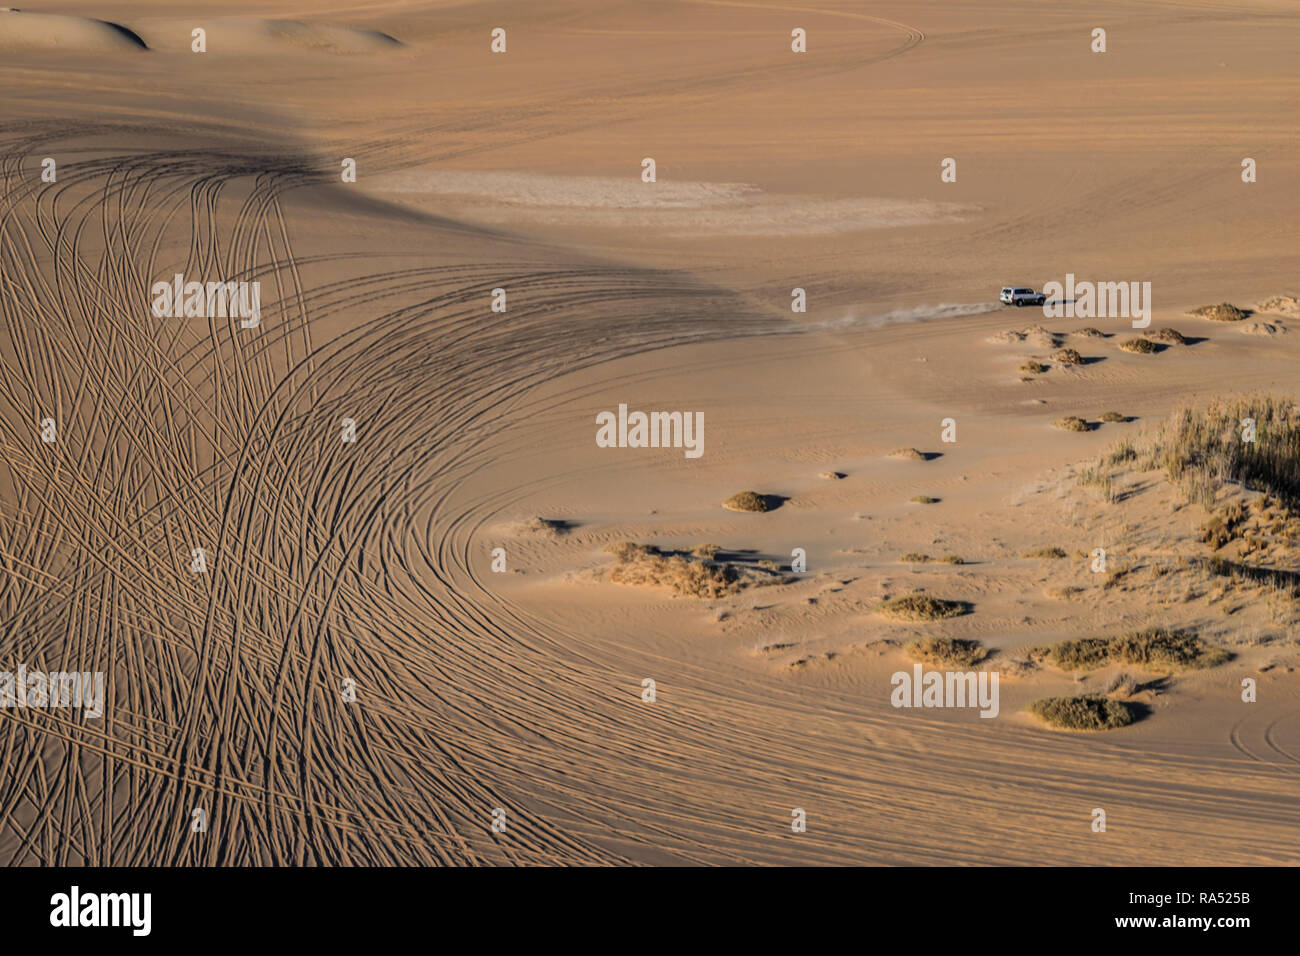 wonderful adventure Safari trip by 4x4 cars in Siwa desert , Egypt Stock Photo